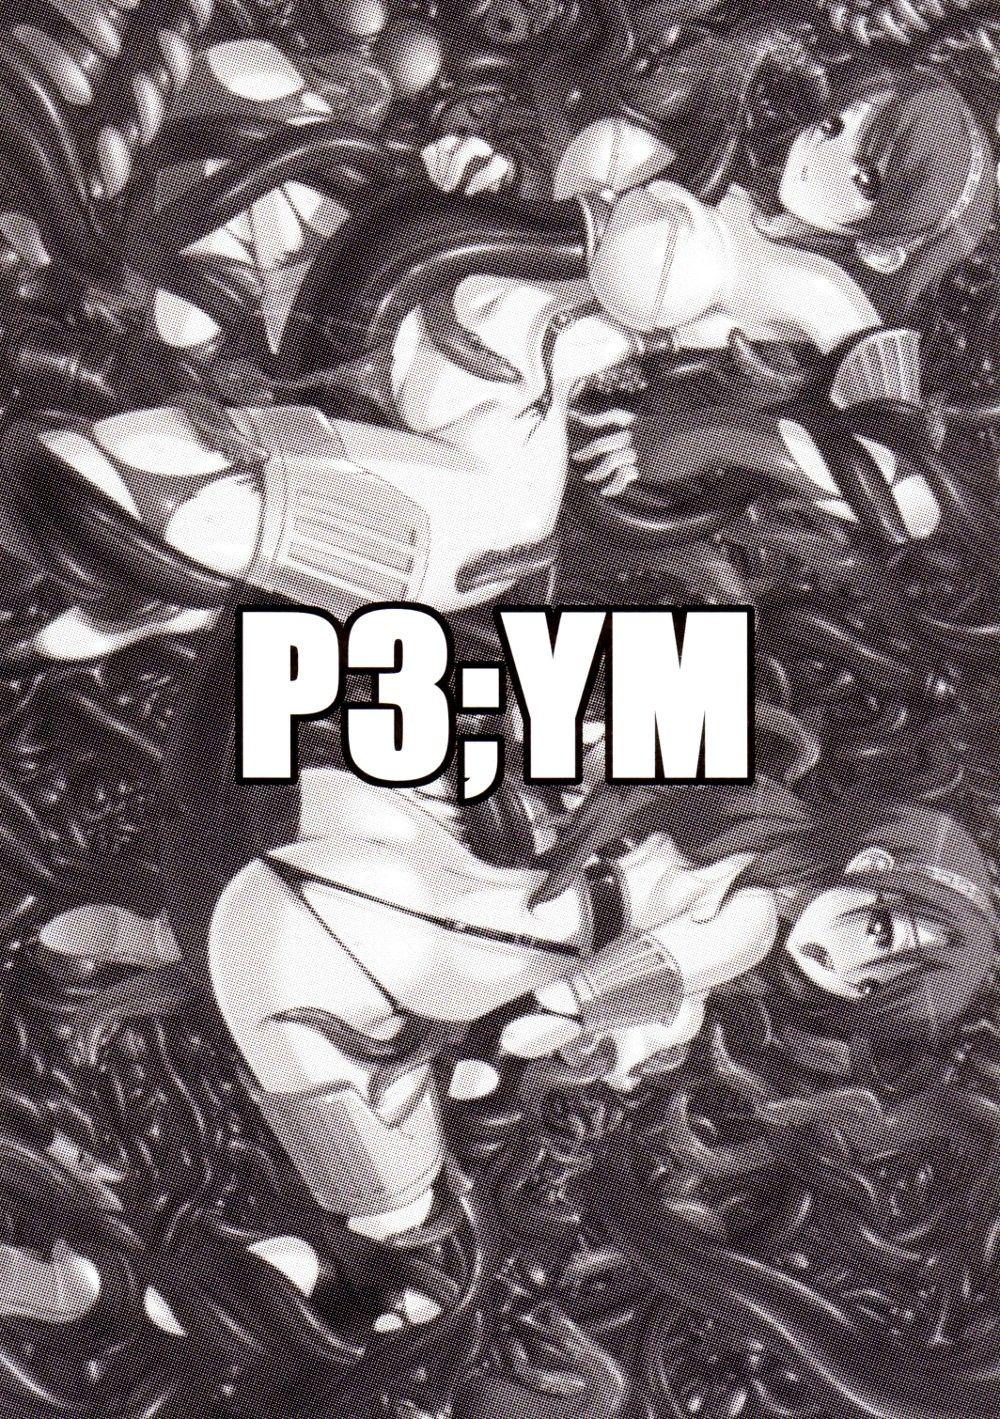 P3;YM 2